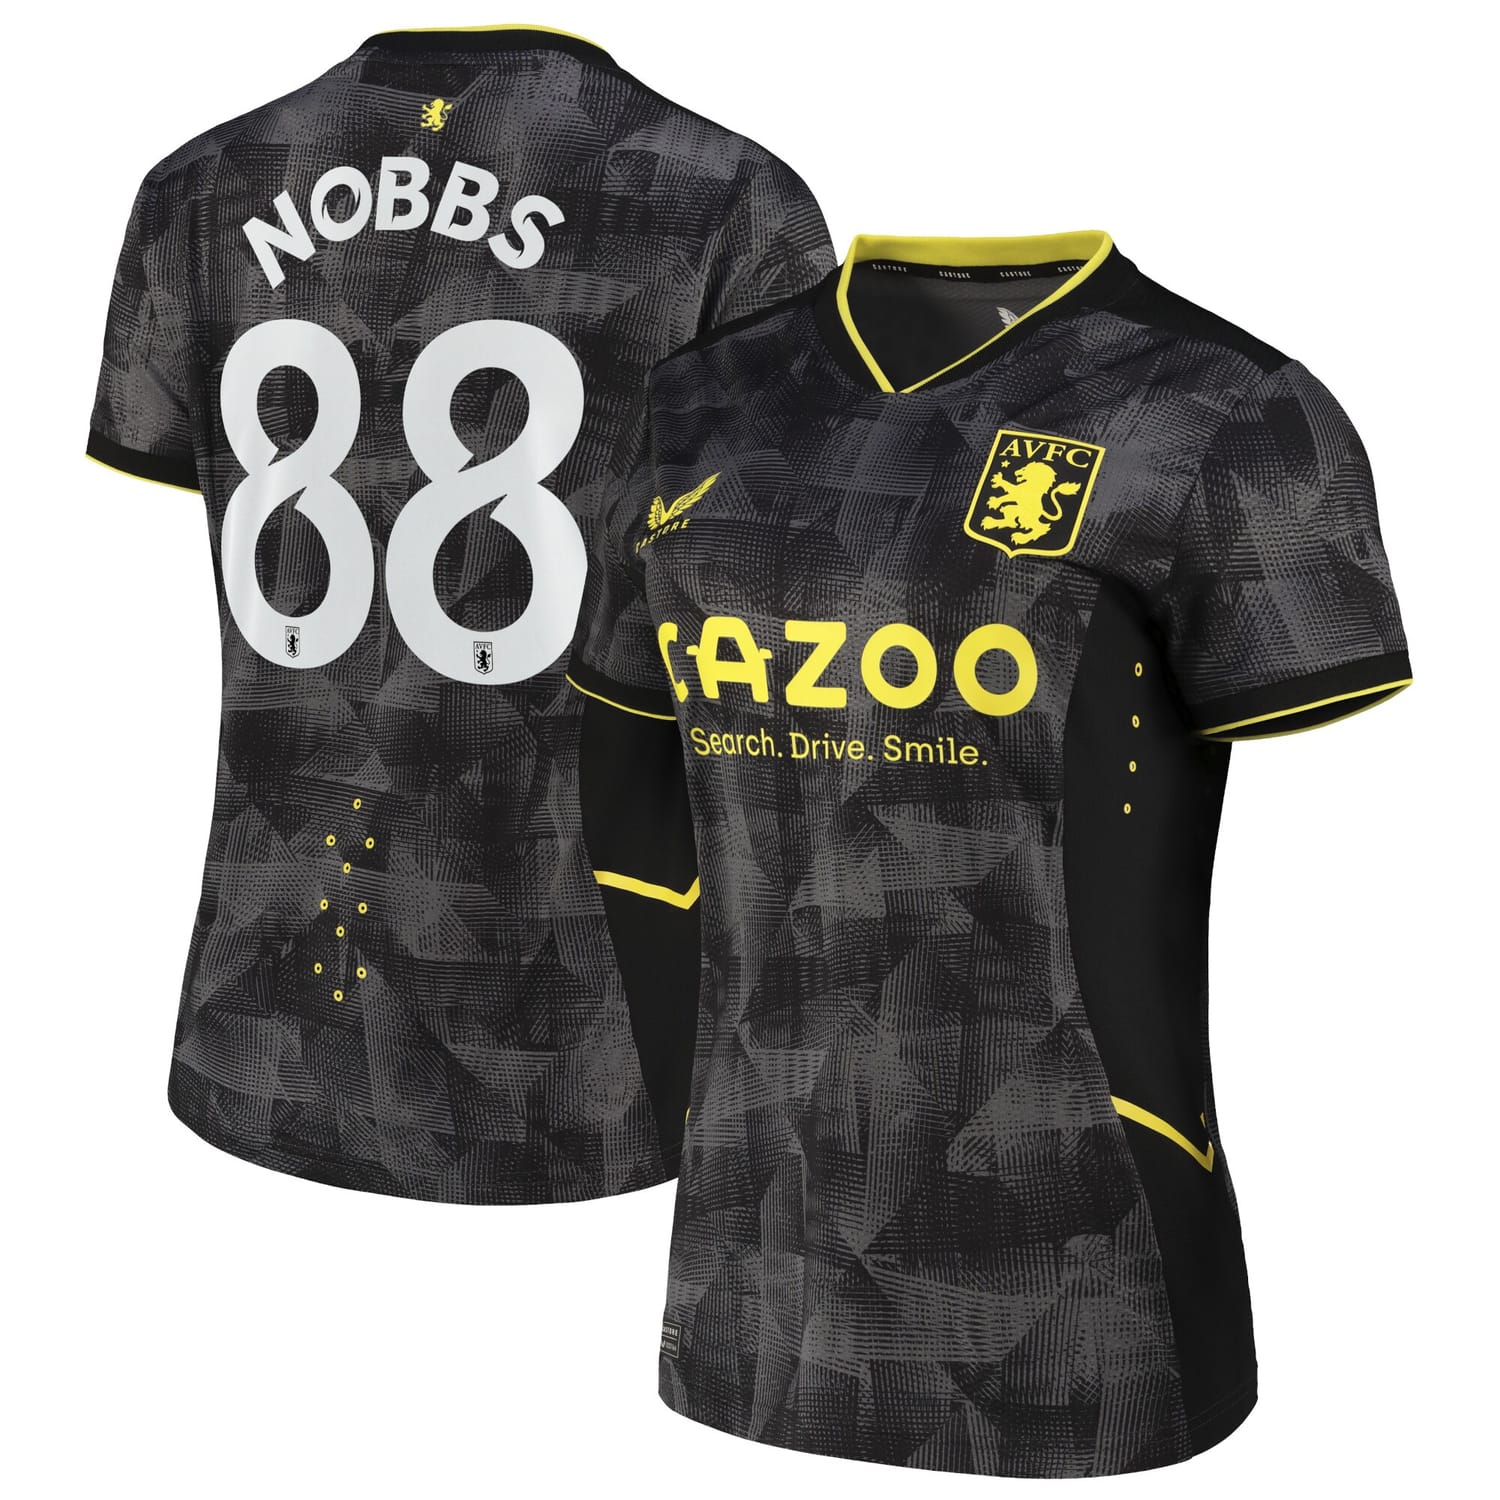 Premier League Aston Villa Third Cup Pro Jersey Shirt 2022-23 player Jordan Nobbs 88 printing for Women